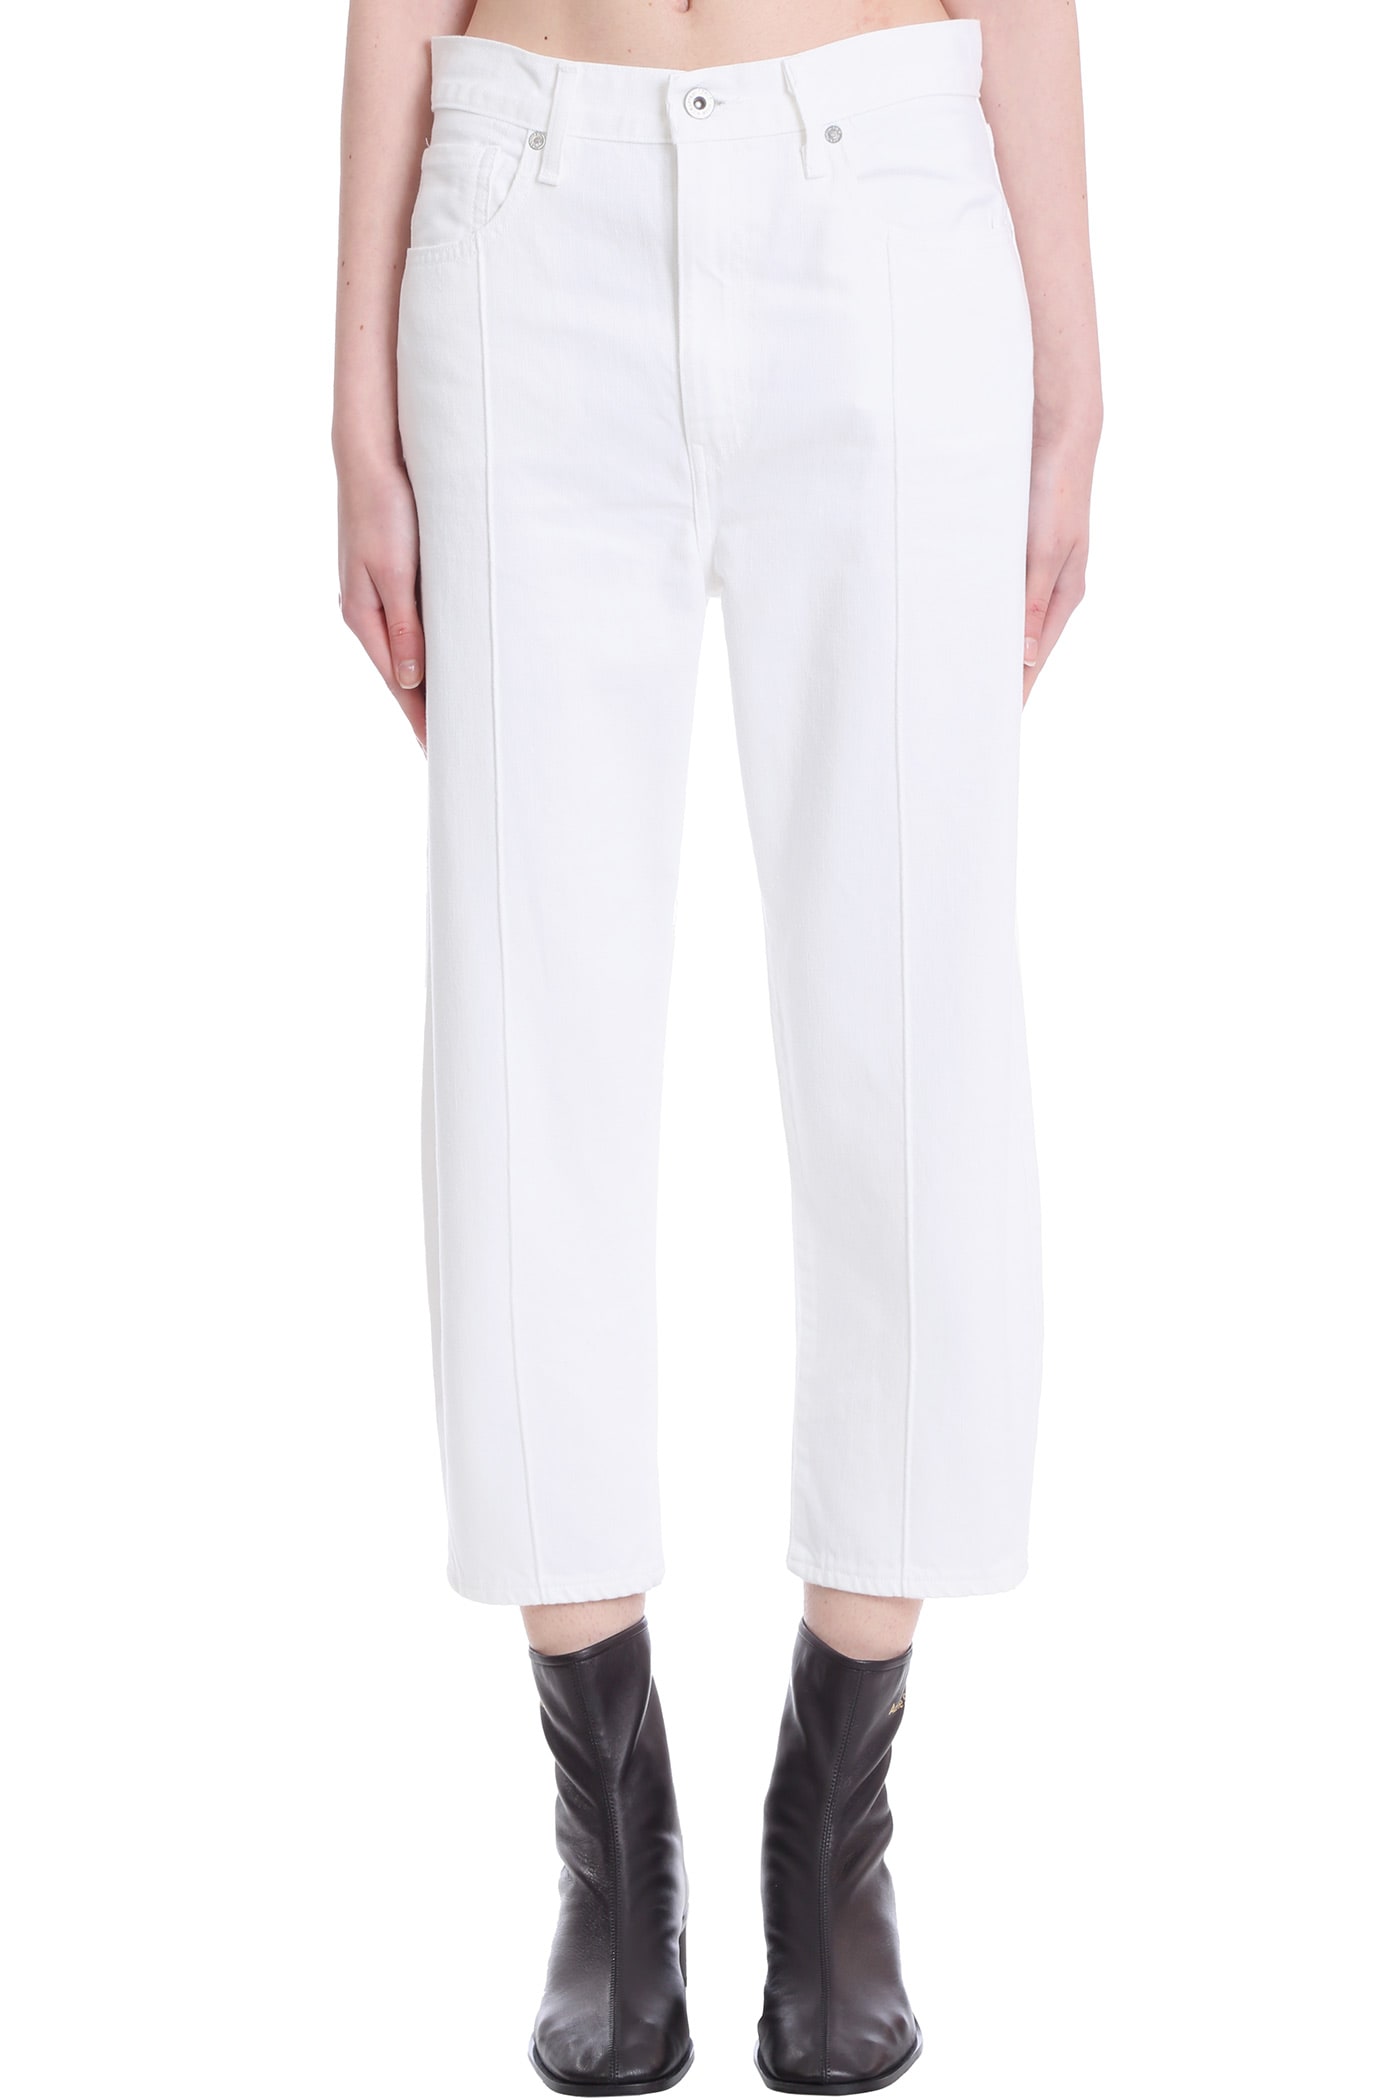 Levis Barrel Jeans In White Denim